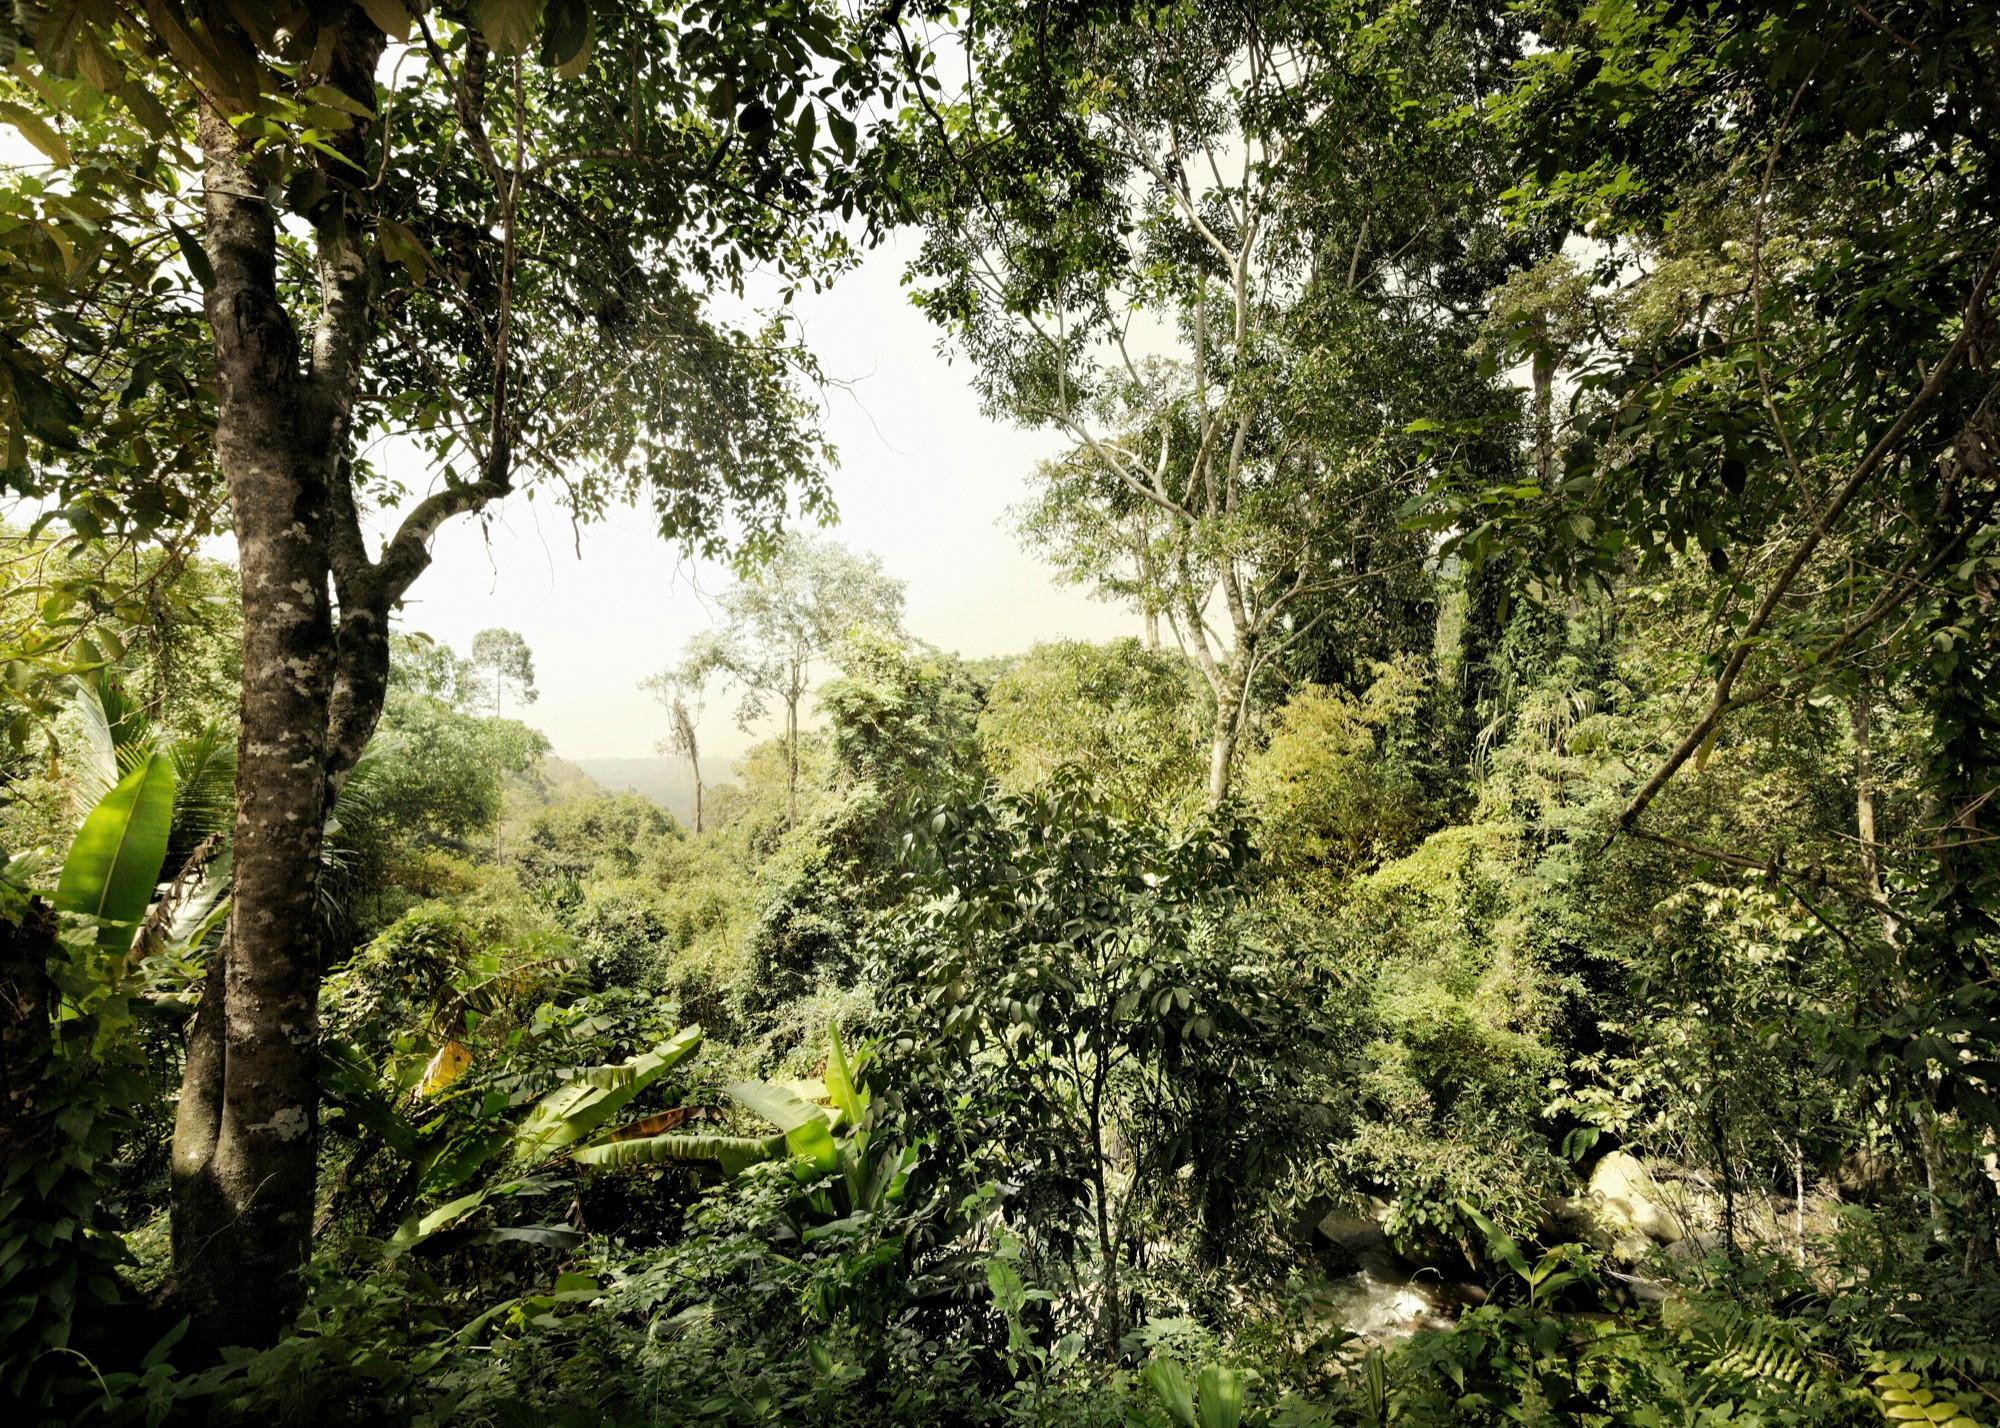 Komar Fototapete Dschungel B/L: ca. 350x250 cm